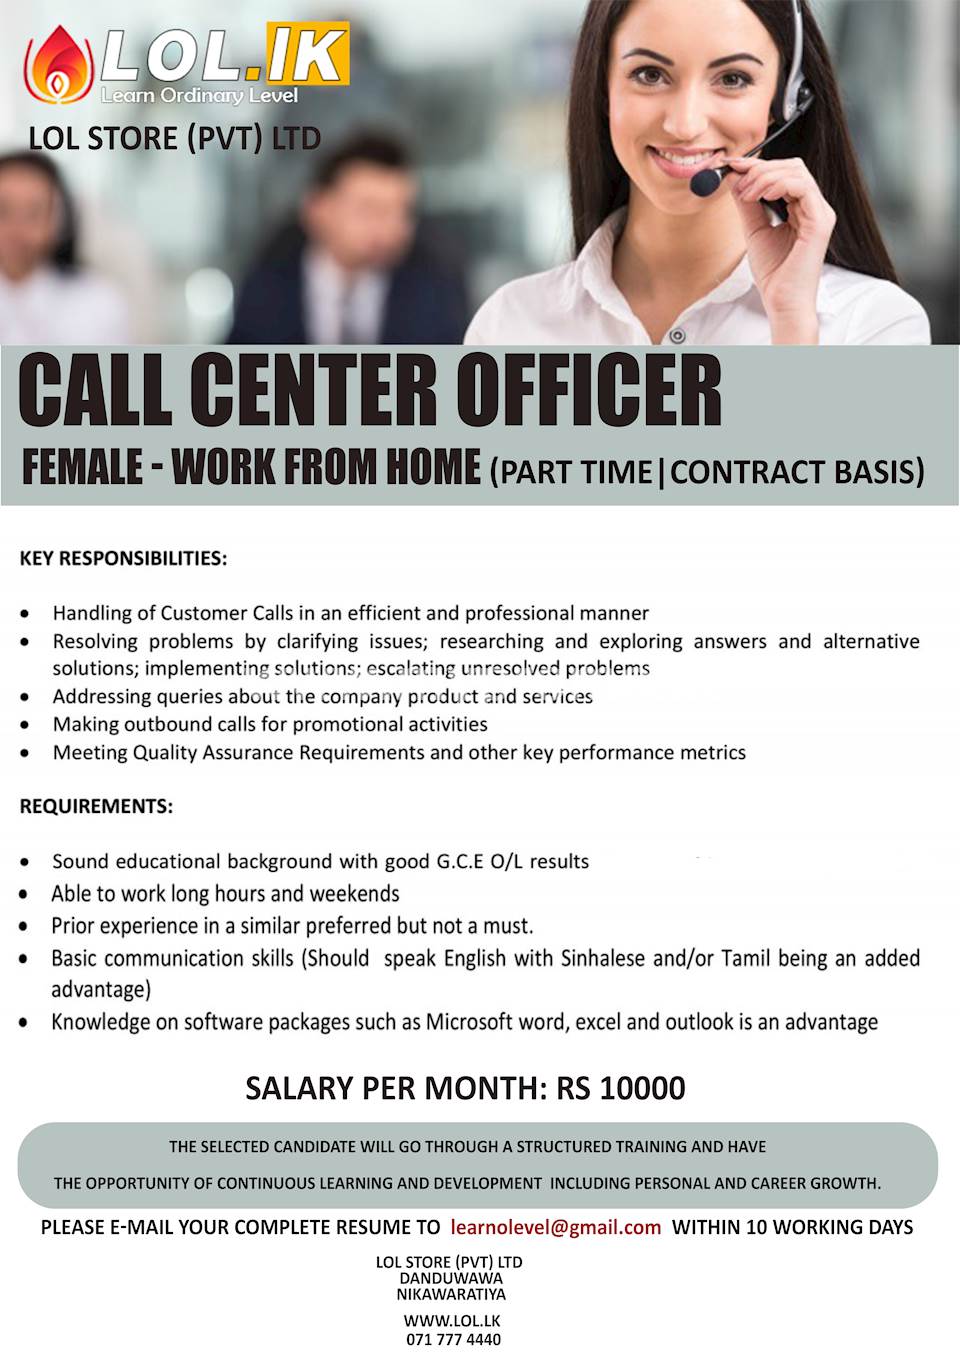 Call Center Officer (Female - Work from Home)